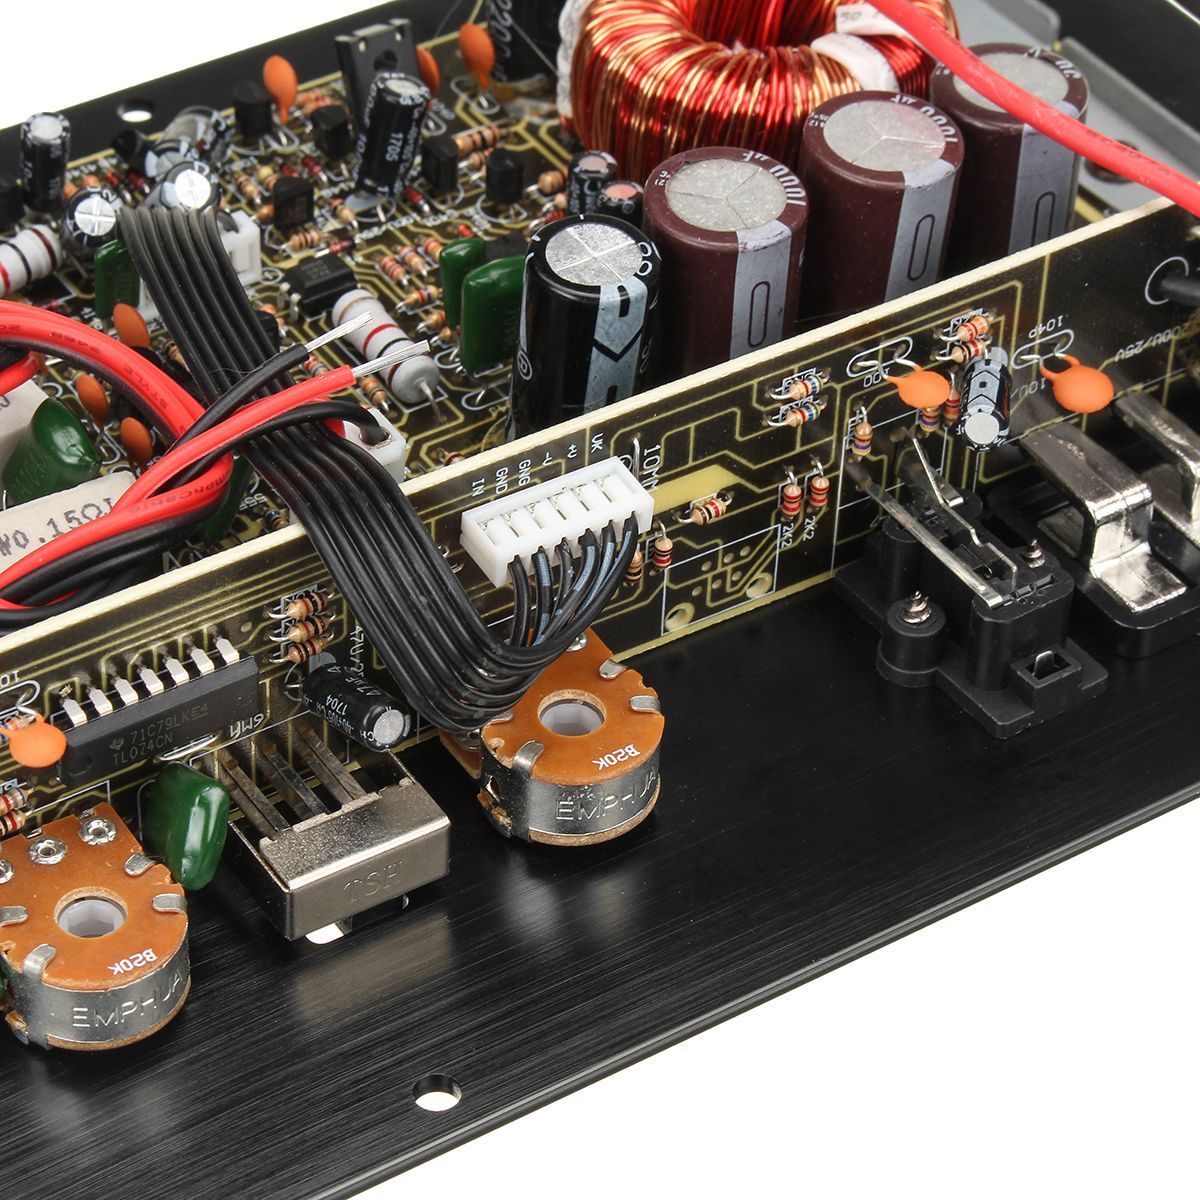 BLJ-190-12V-1000W-Mono-Car-Audio-High-Power-Digital-Amplifier-Board-Powerful-Bass-Subwoofer-1361148